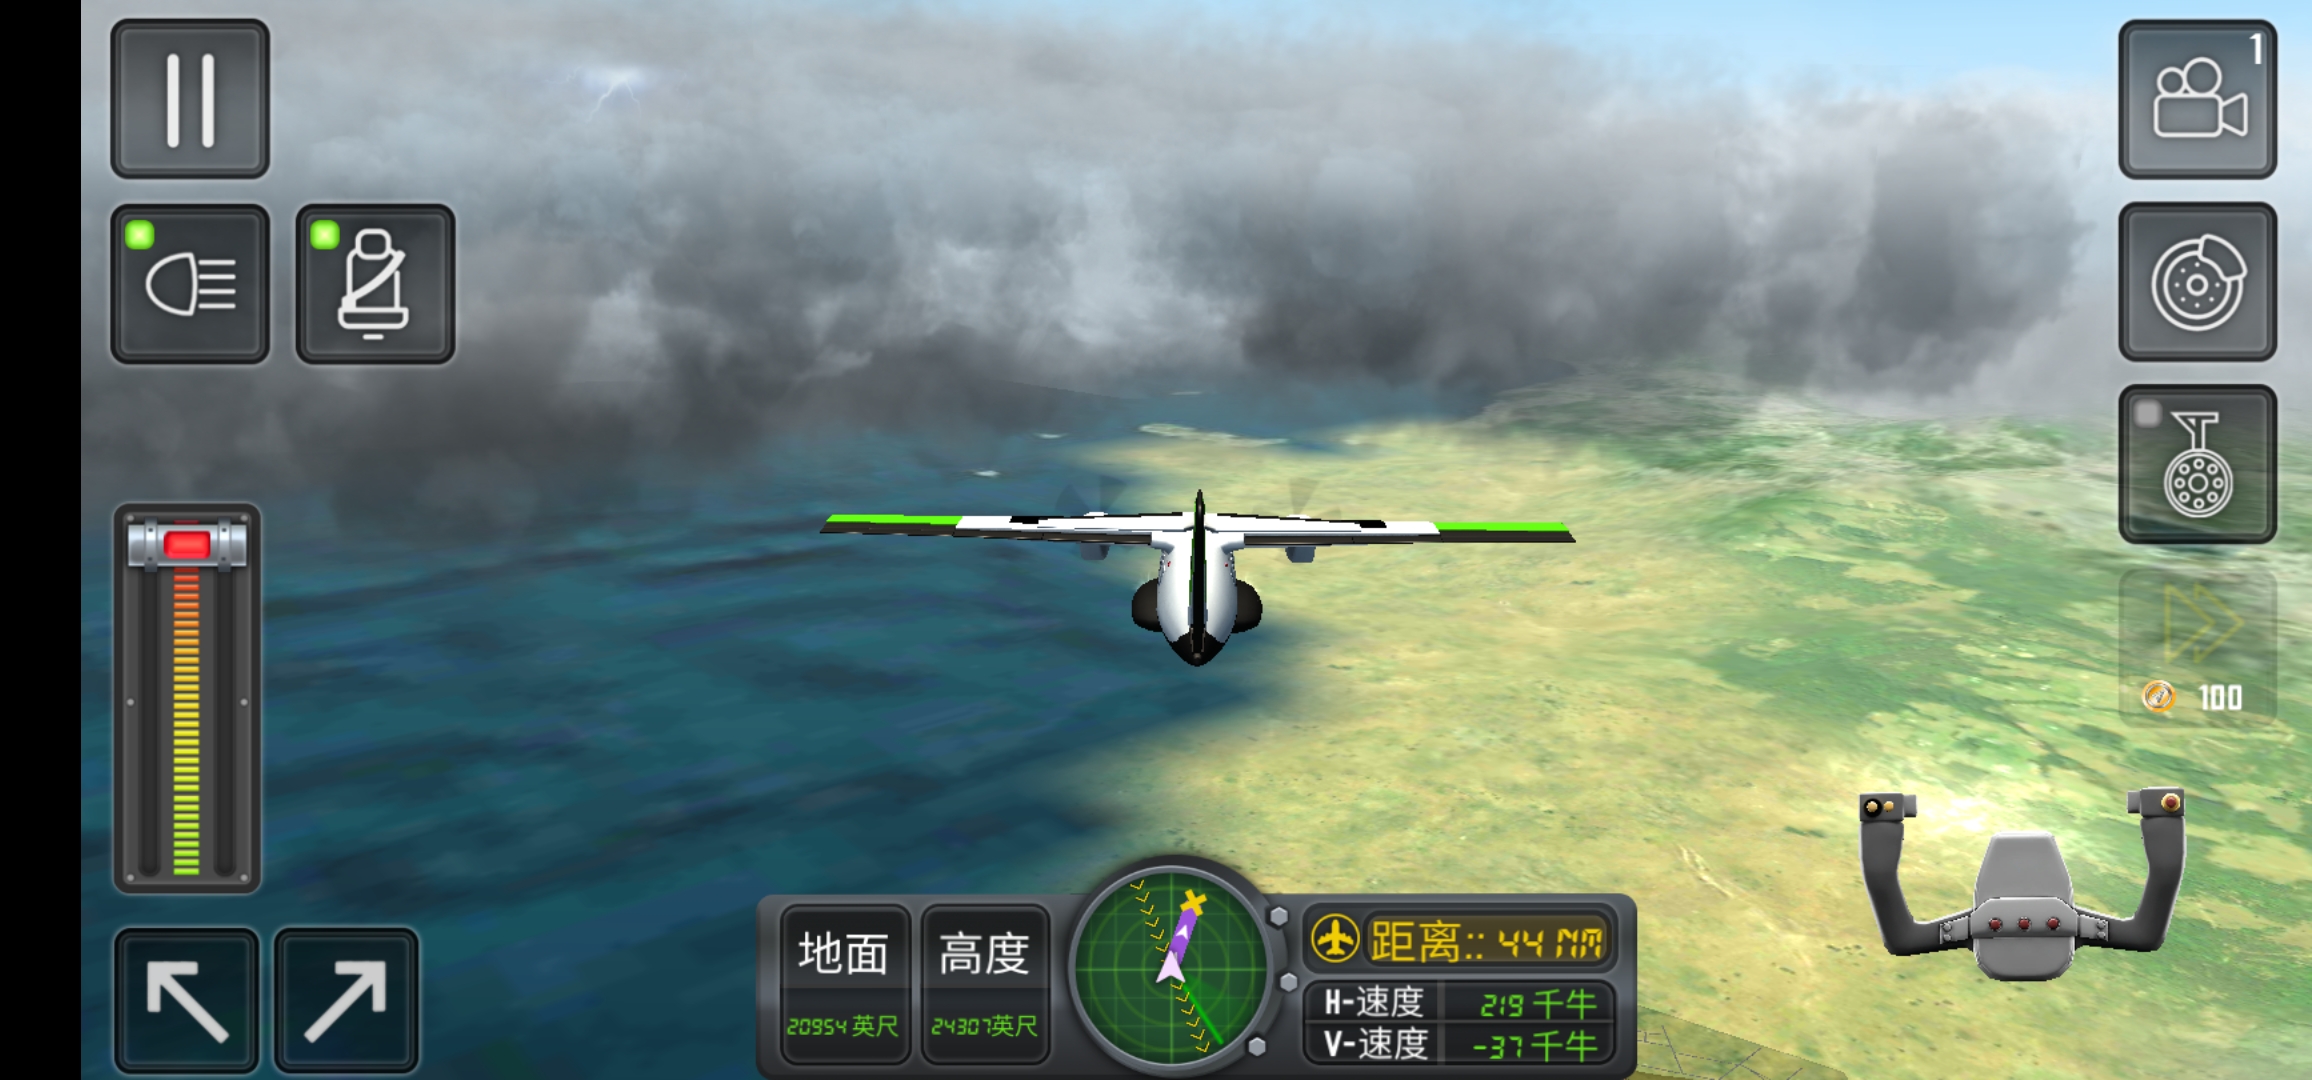 Aircraft rescue simulator